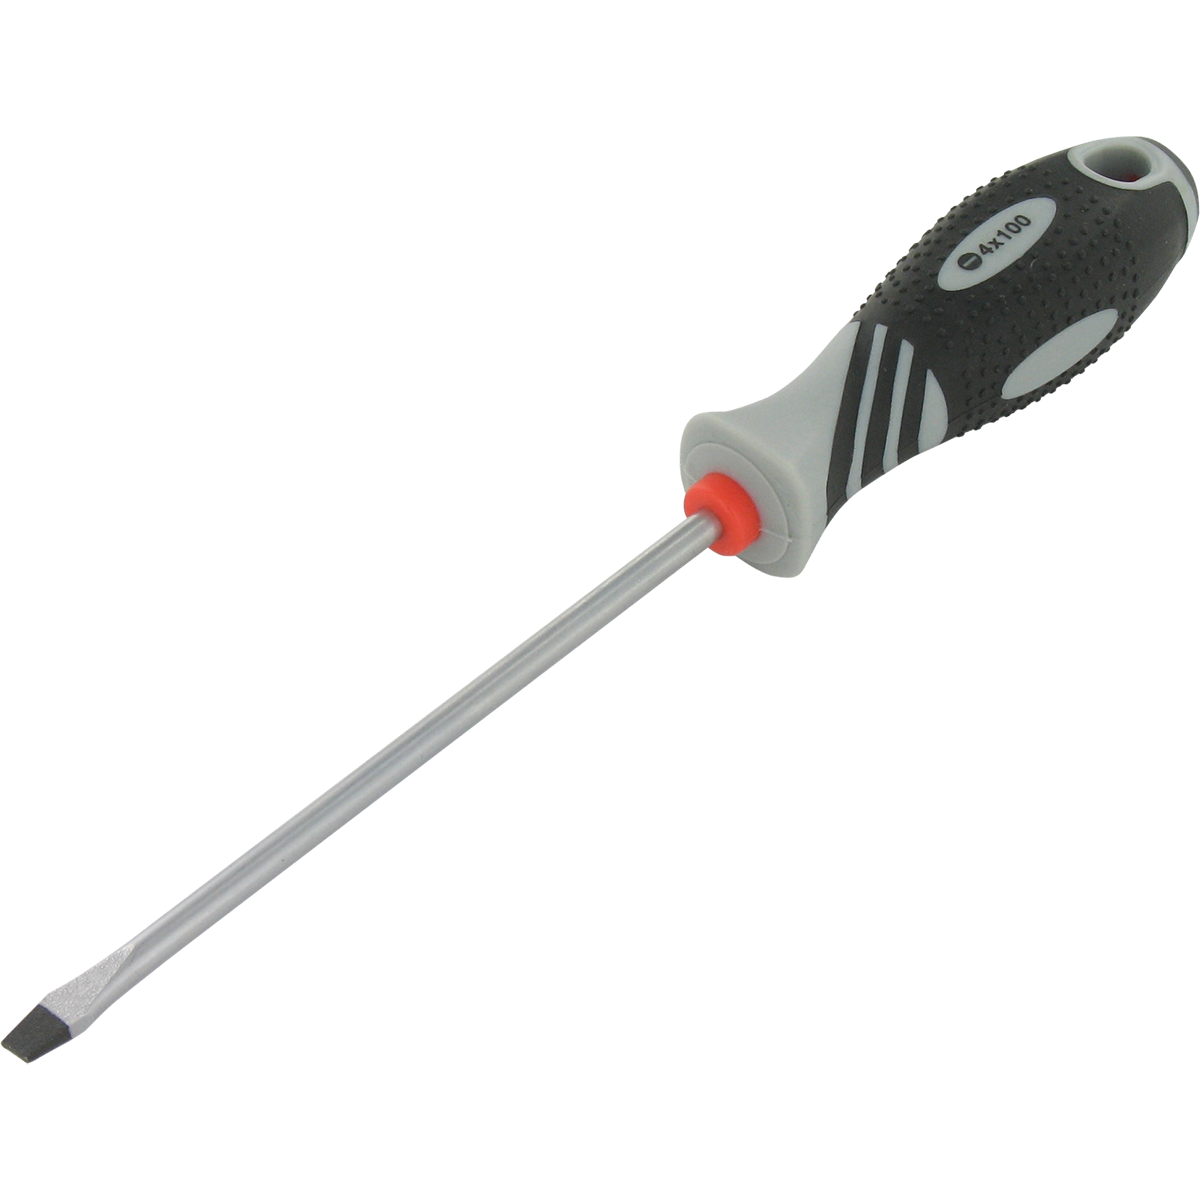 Professional screwdriver - 4mm flat blade